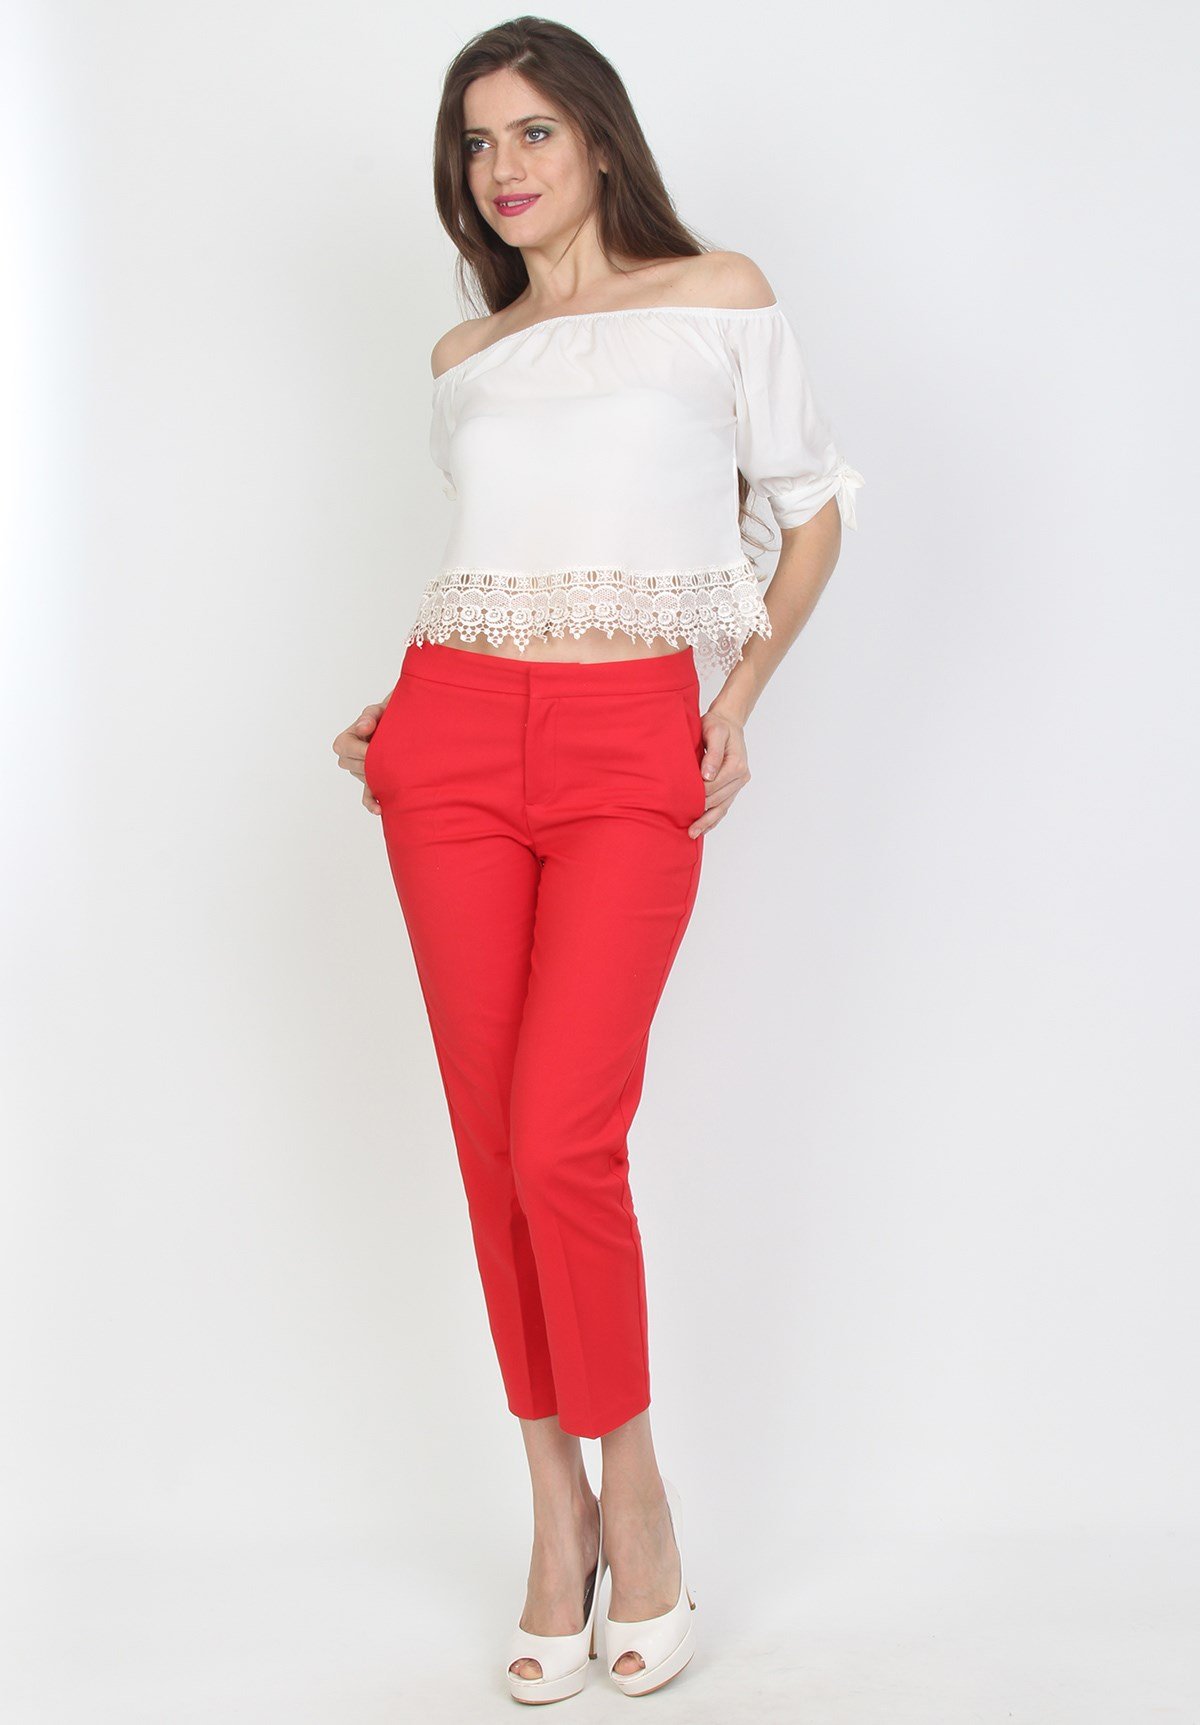 Kırmızı Bilek Boy Bayan Kumaş Pantolon - DKBB0005